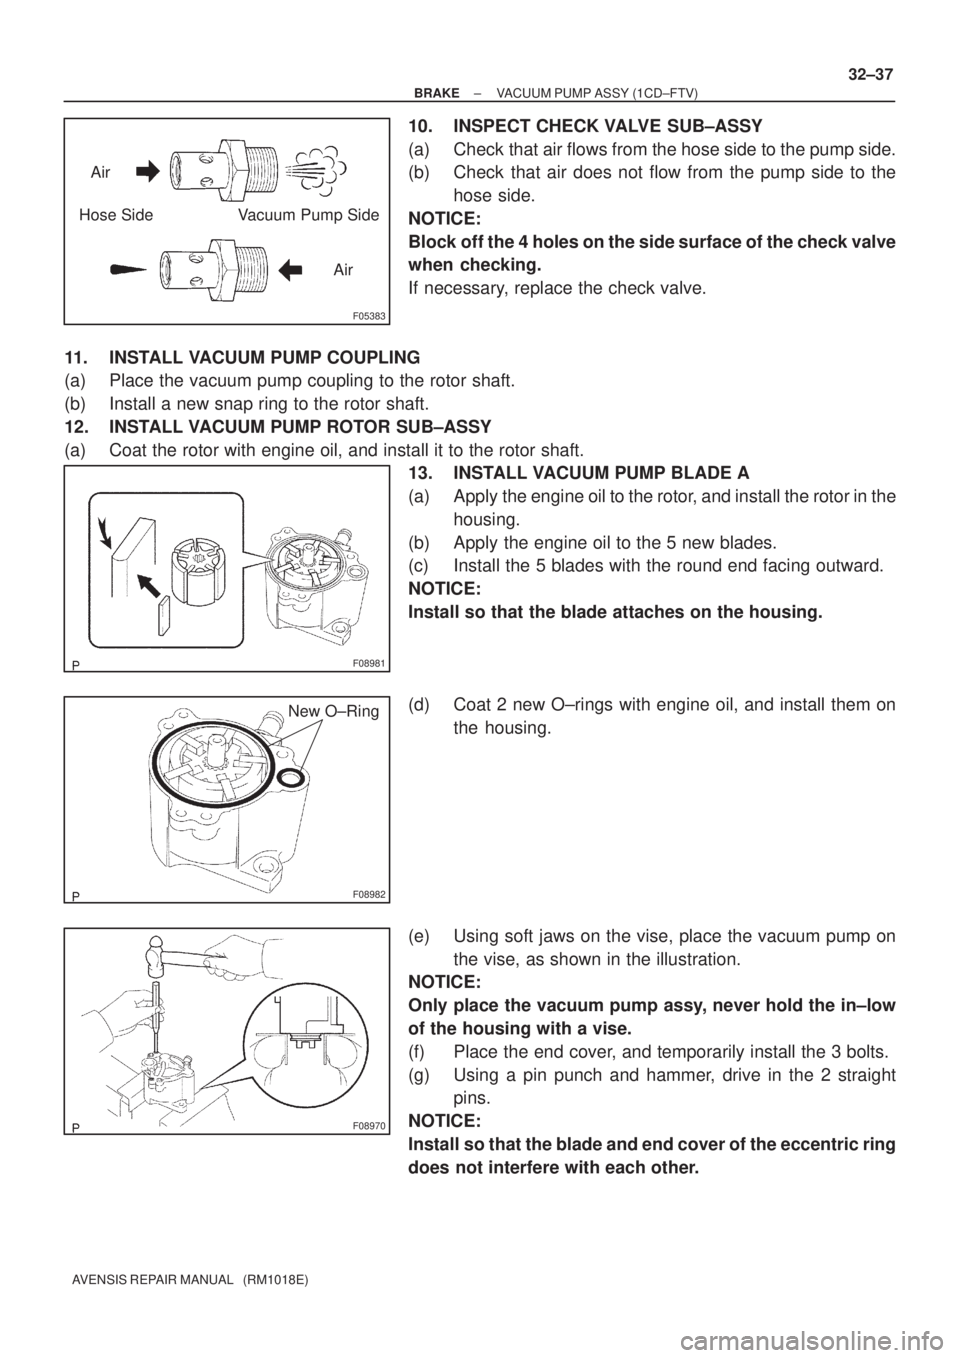 TOYOTA AVENSIS 2005  Service Repair Manual F05383
Air
Hose Side Vacuum Pump Side
Air
F08981
F08982
New O±Ring
F08970
± BRAKEVACUUM PUMP ASSY (1CD±FTV)
32±37
AVENSIS REPAIR MANUAL   (RM1018E)
10. INSPECT CHECK VALVE  SUB±ASSY
(a) Check tha